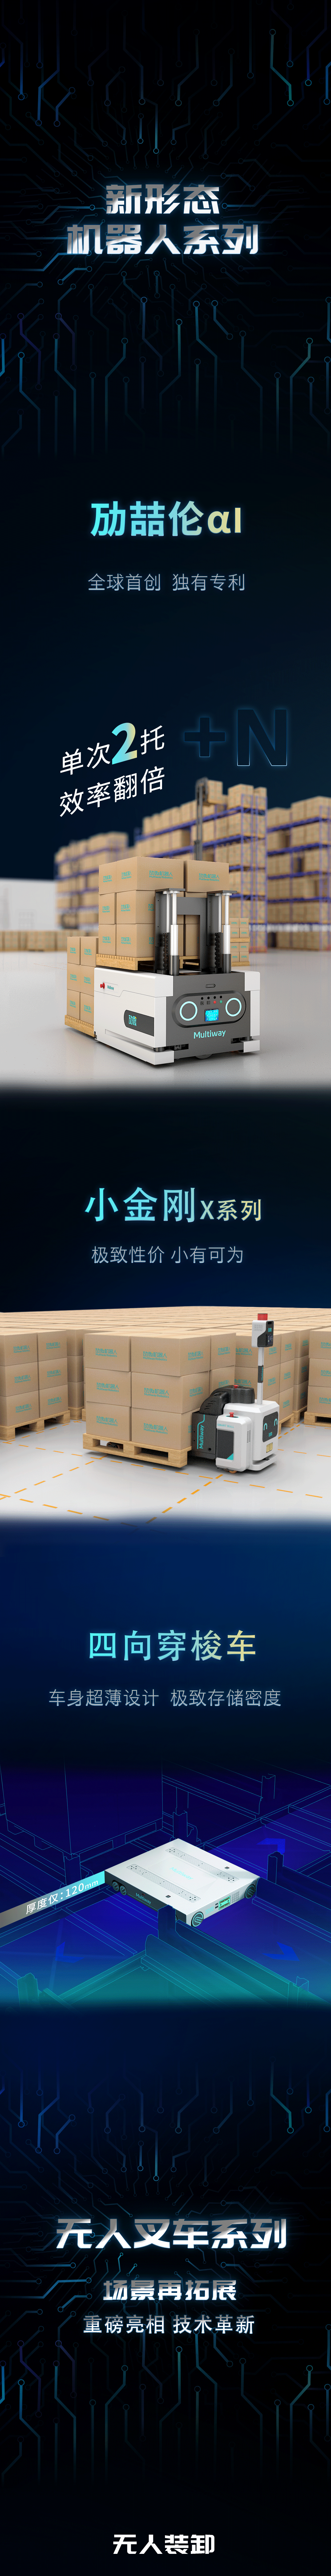 ITES深圳工业展 | 劢微机器人邀您见证整场智能物流！